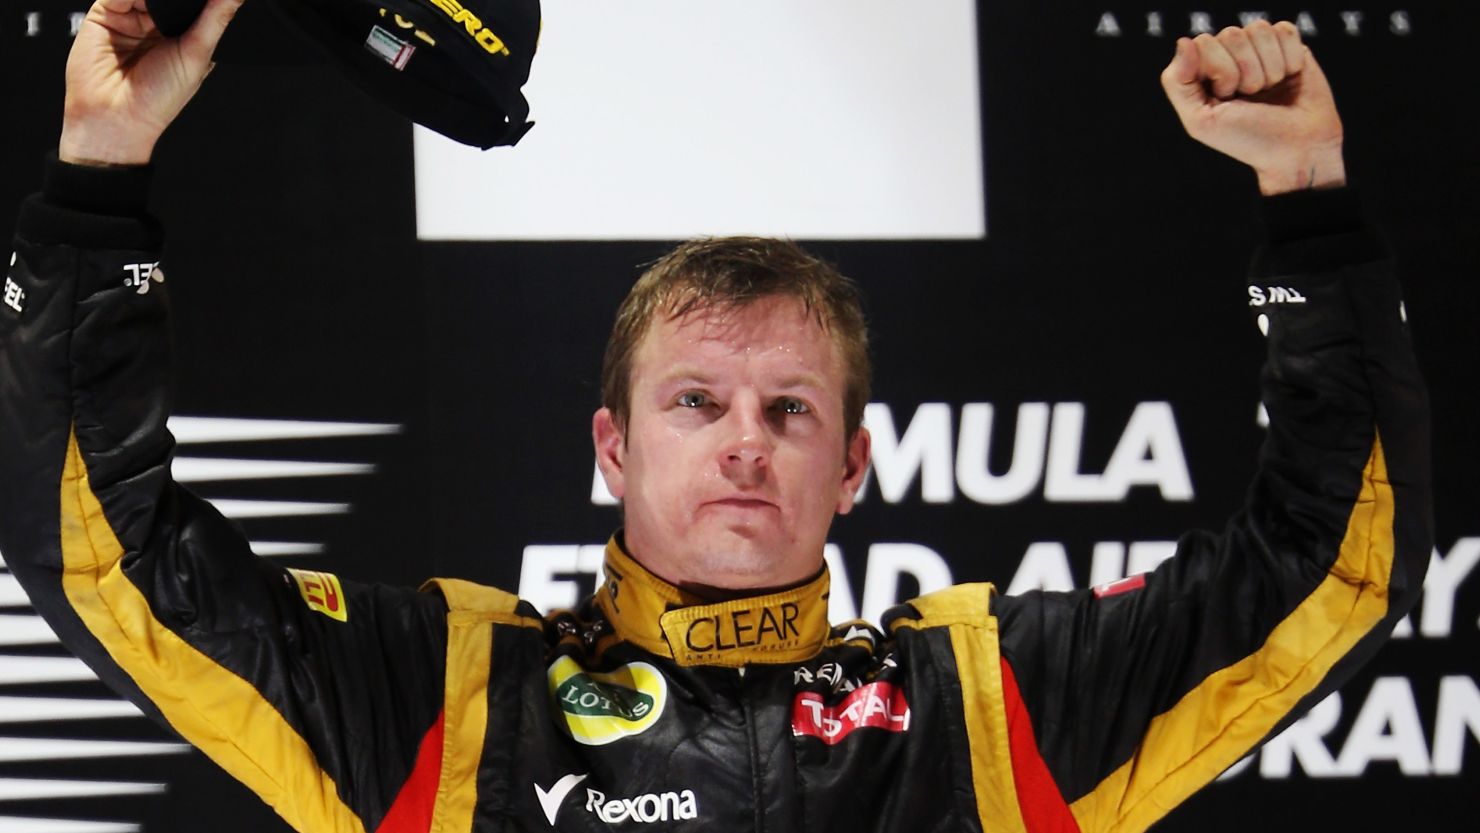 Kimi Raikkonen's last grand prix win prior to Sunday's Abu Dhabi triumph was in Belgium in 2009.